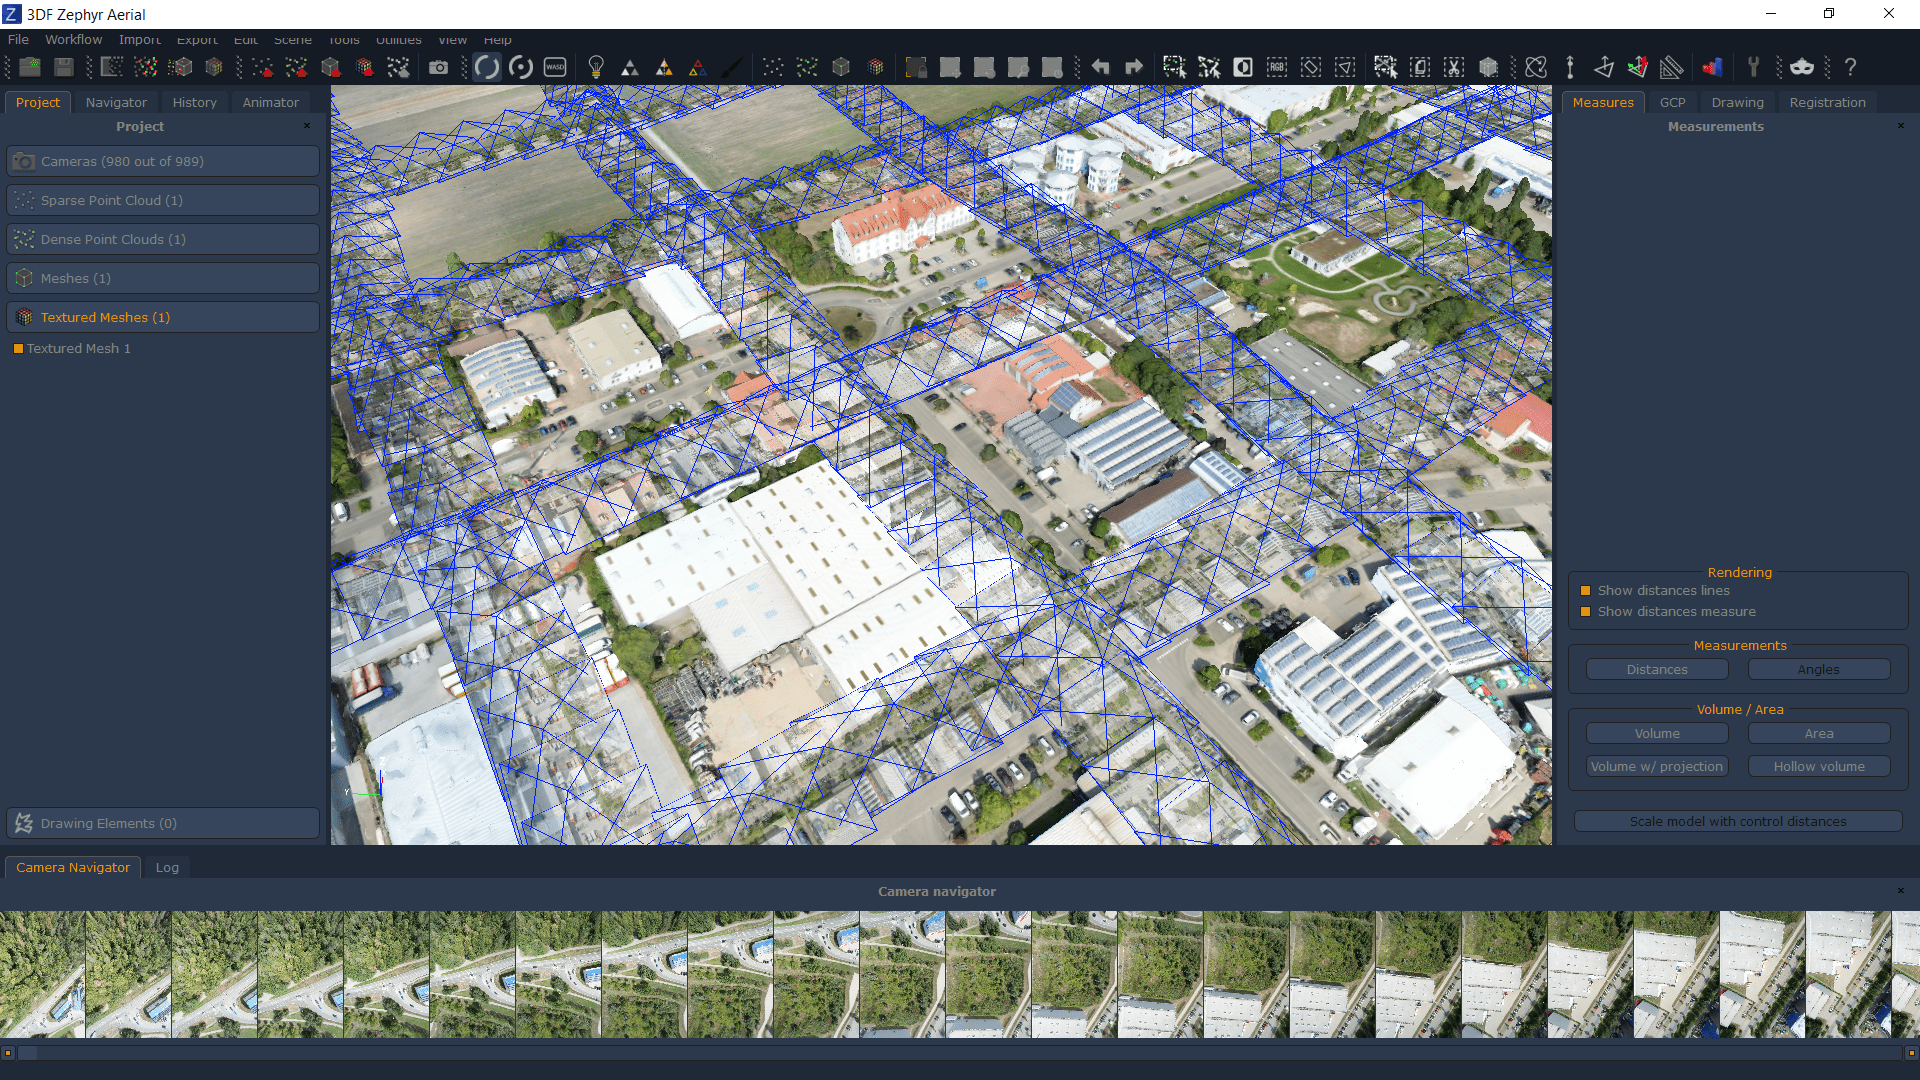 3DF Zephyr Aerial photogrammetry software